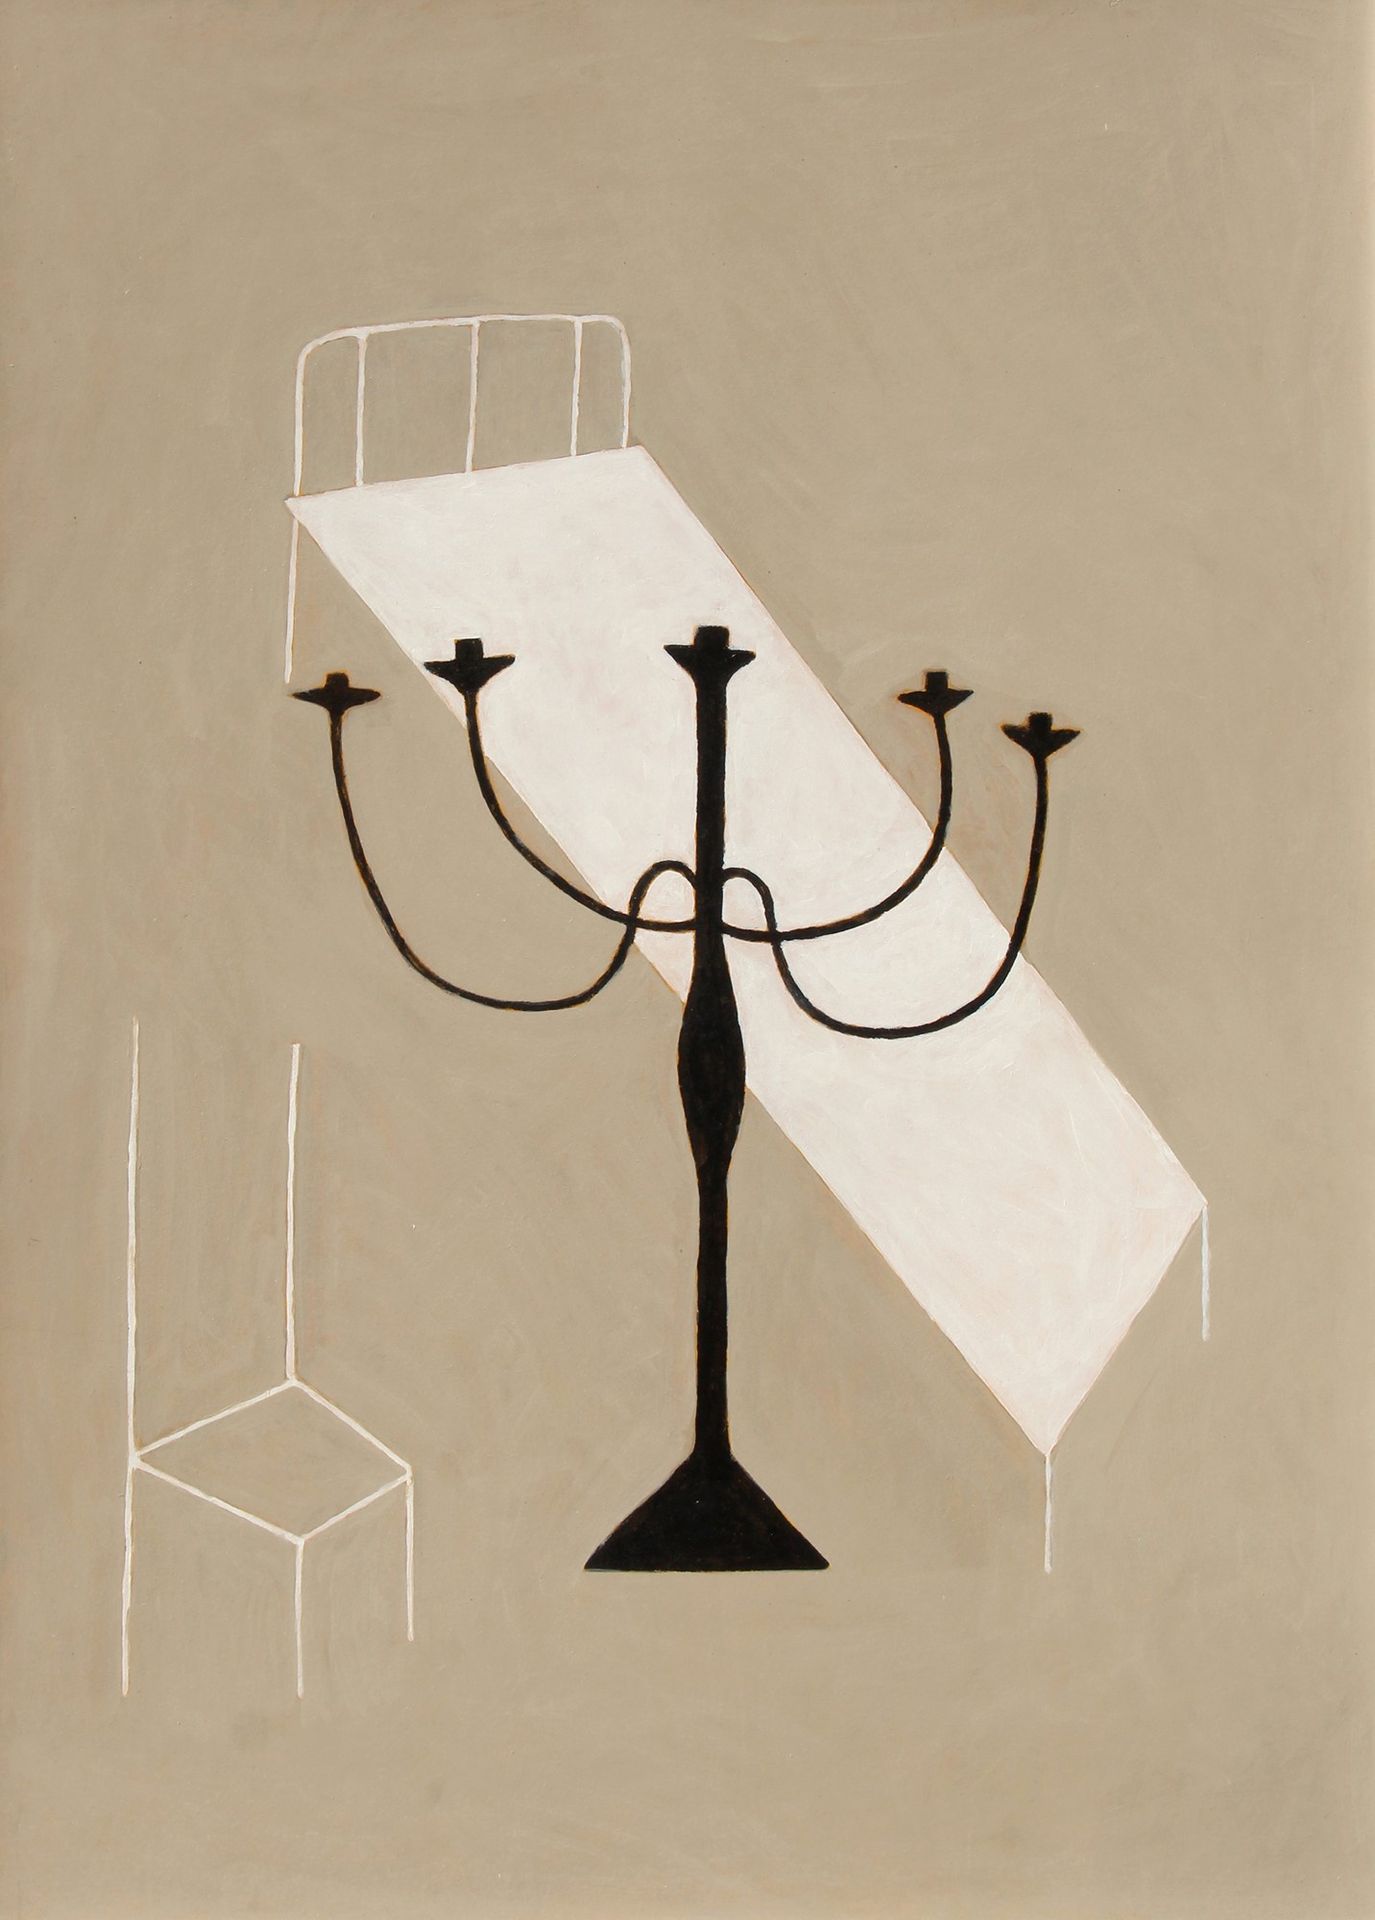 Mimmo PALADINO Untitled 1987年，纸板上的混合媒体，cm. 103x72

由艺术家颁发的证书